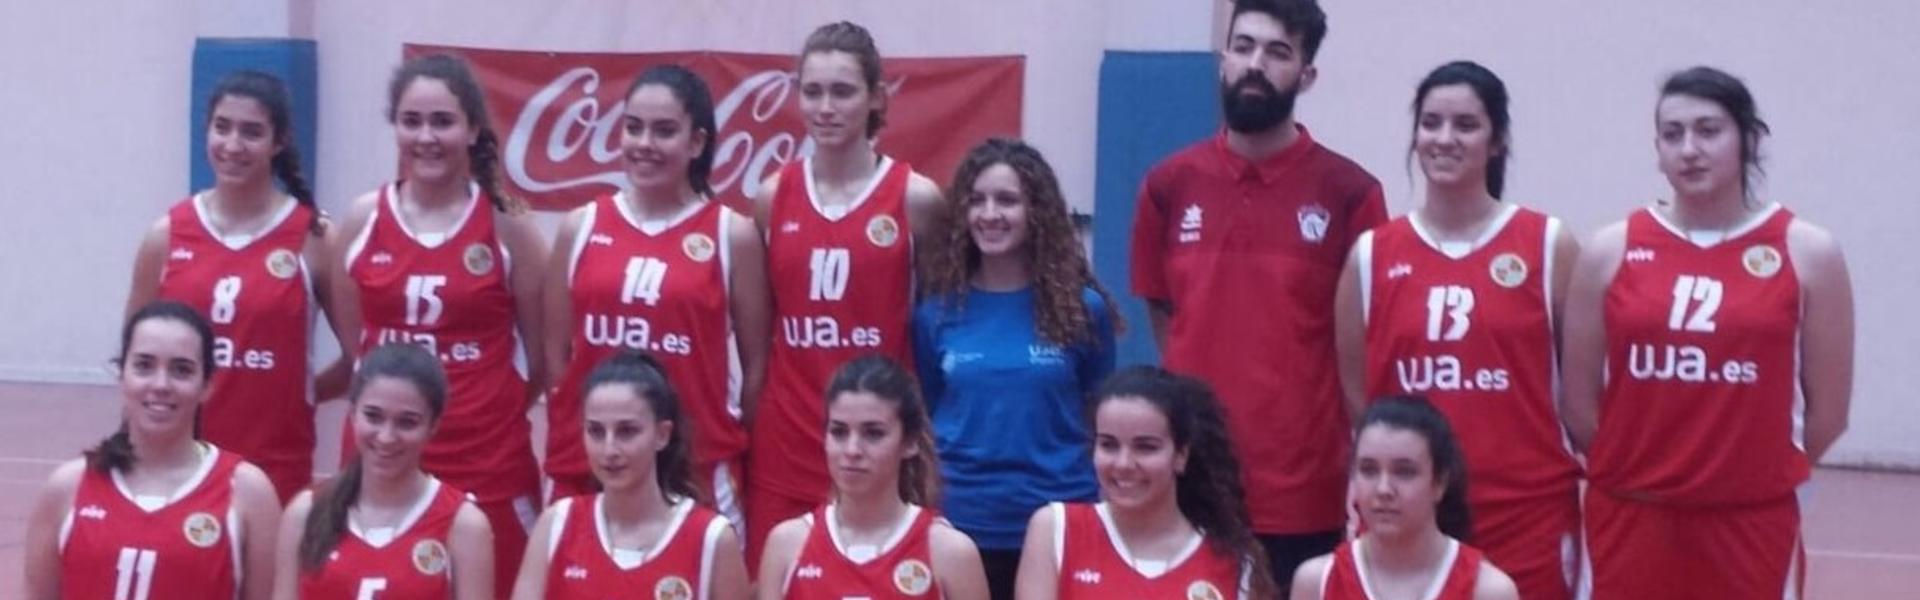 Campeonato de Andalucía Universitario de Baloncesto femenino